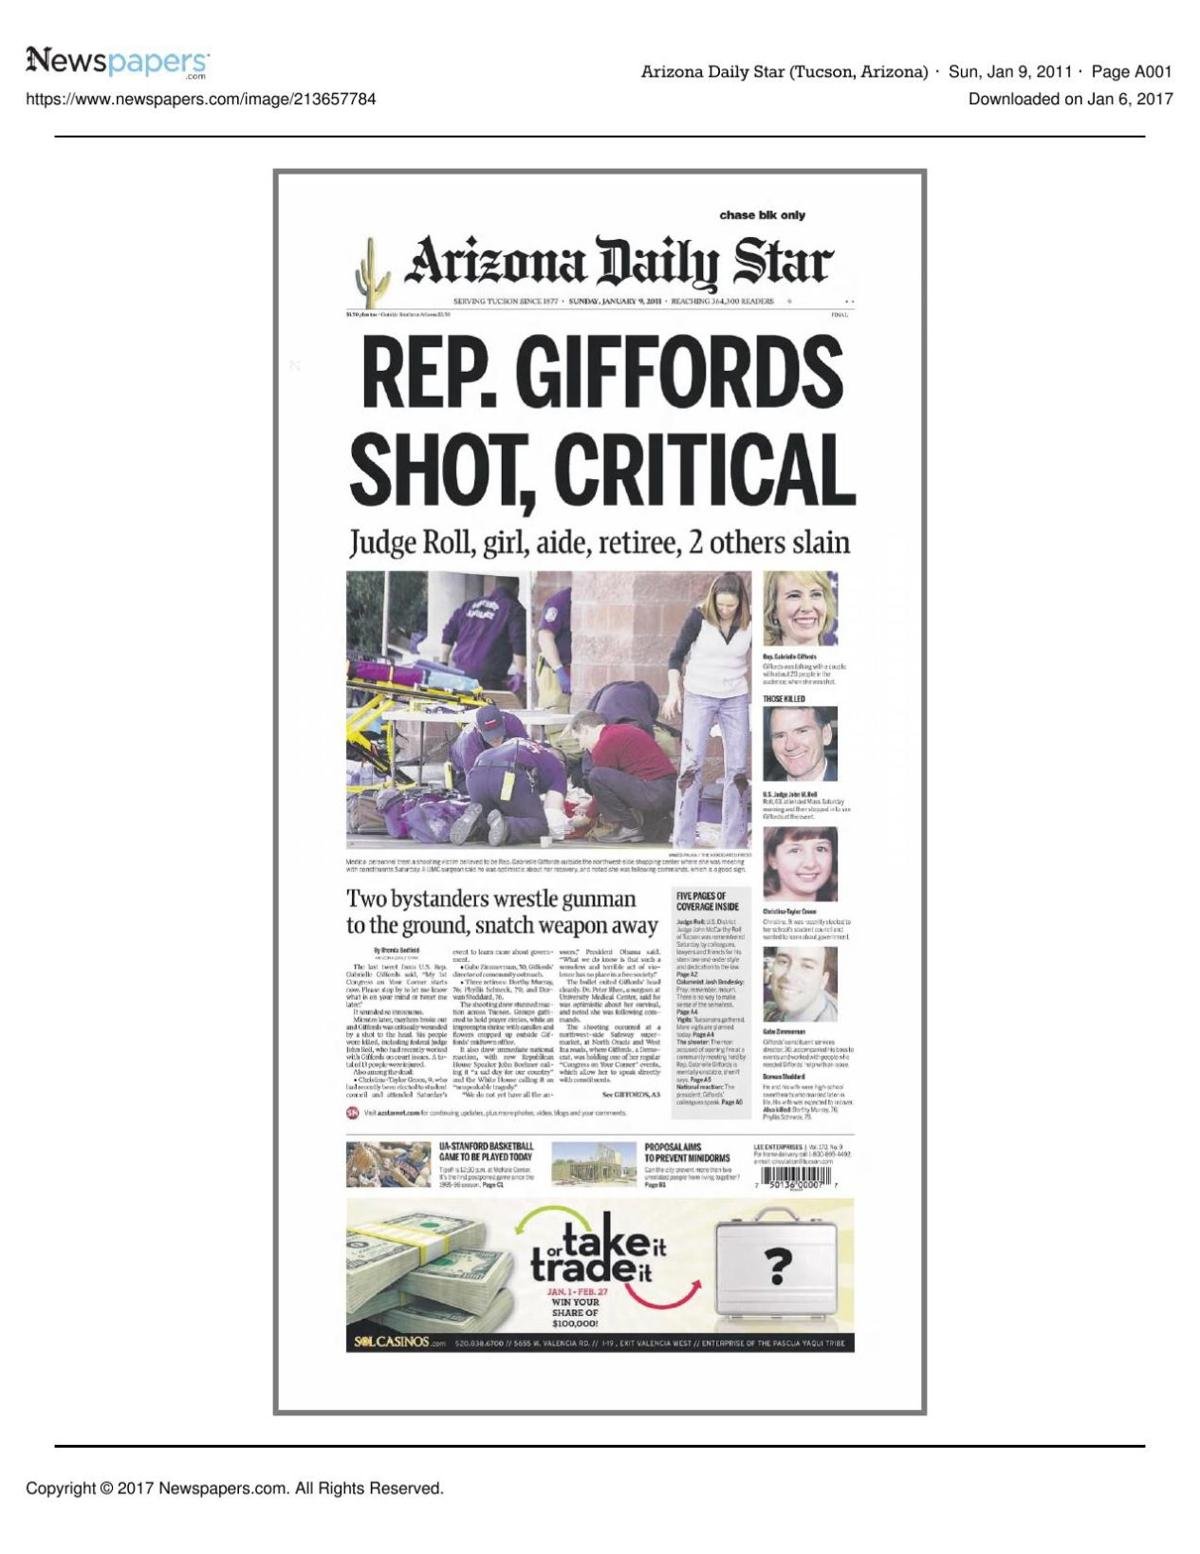 Arizona Daily Star front page Jan. 9, 2011